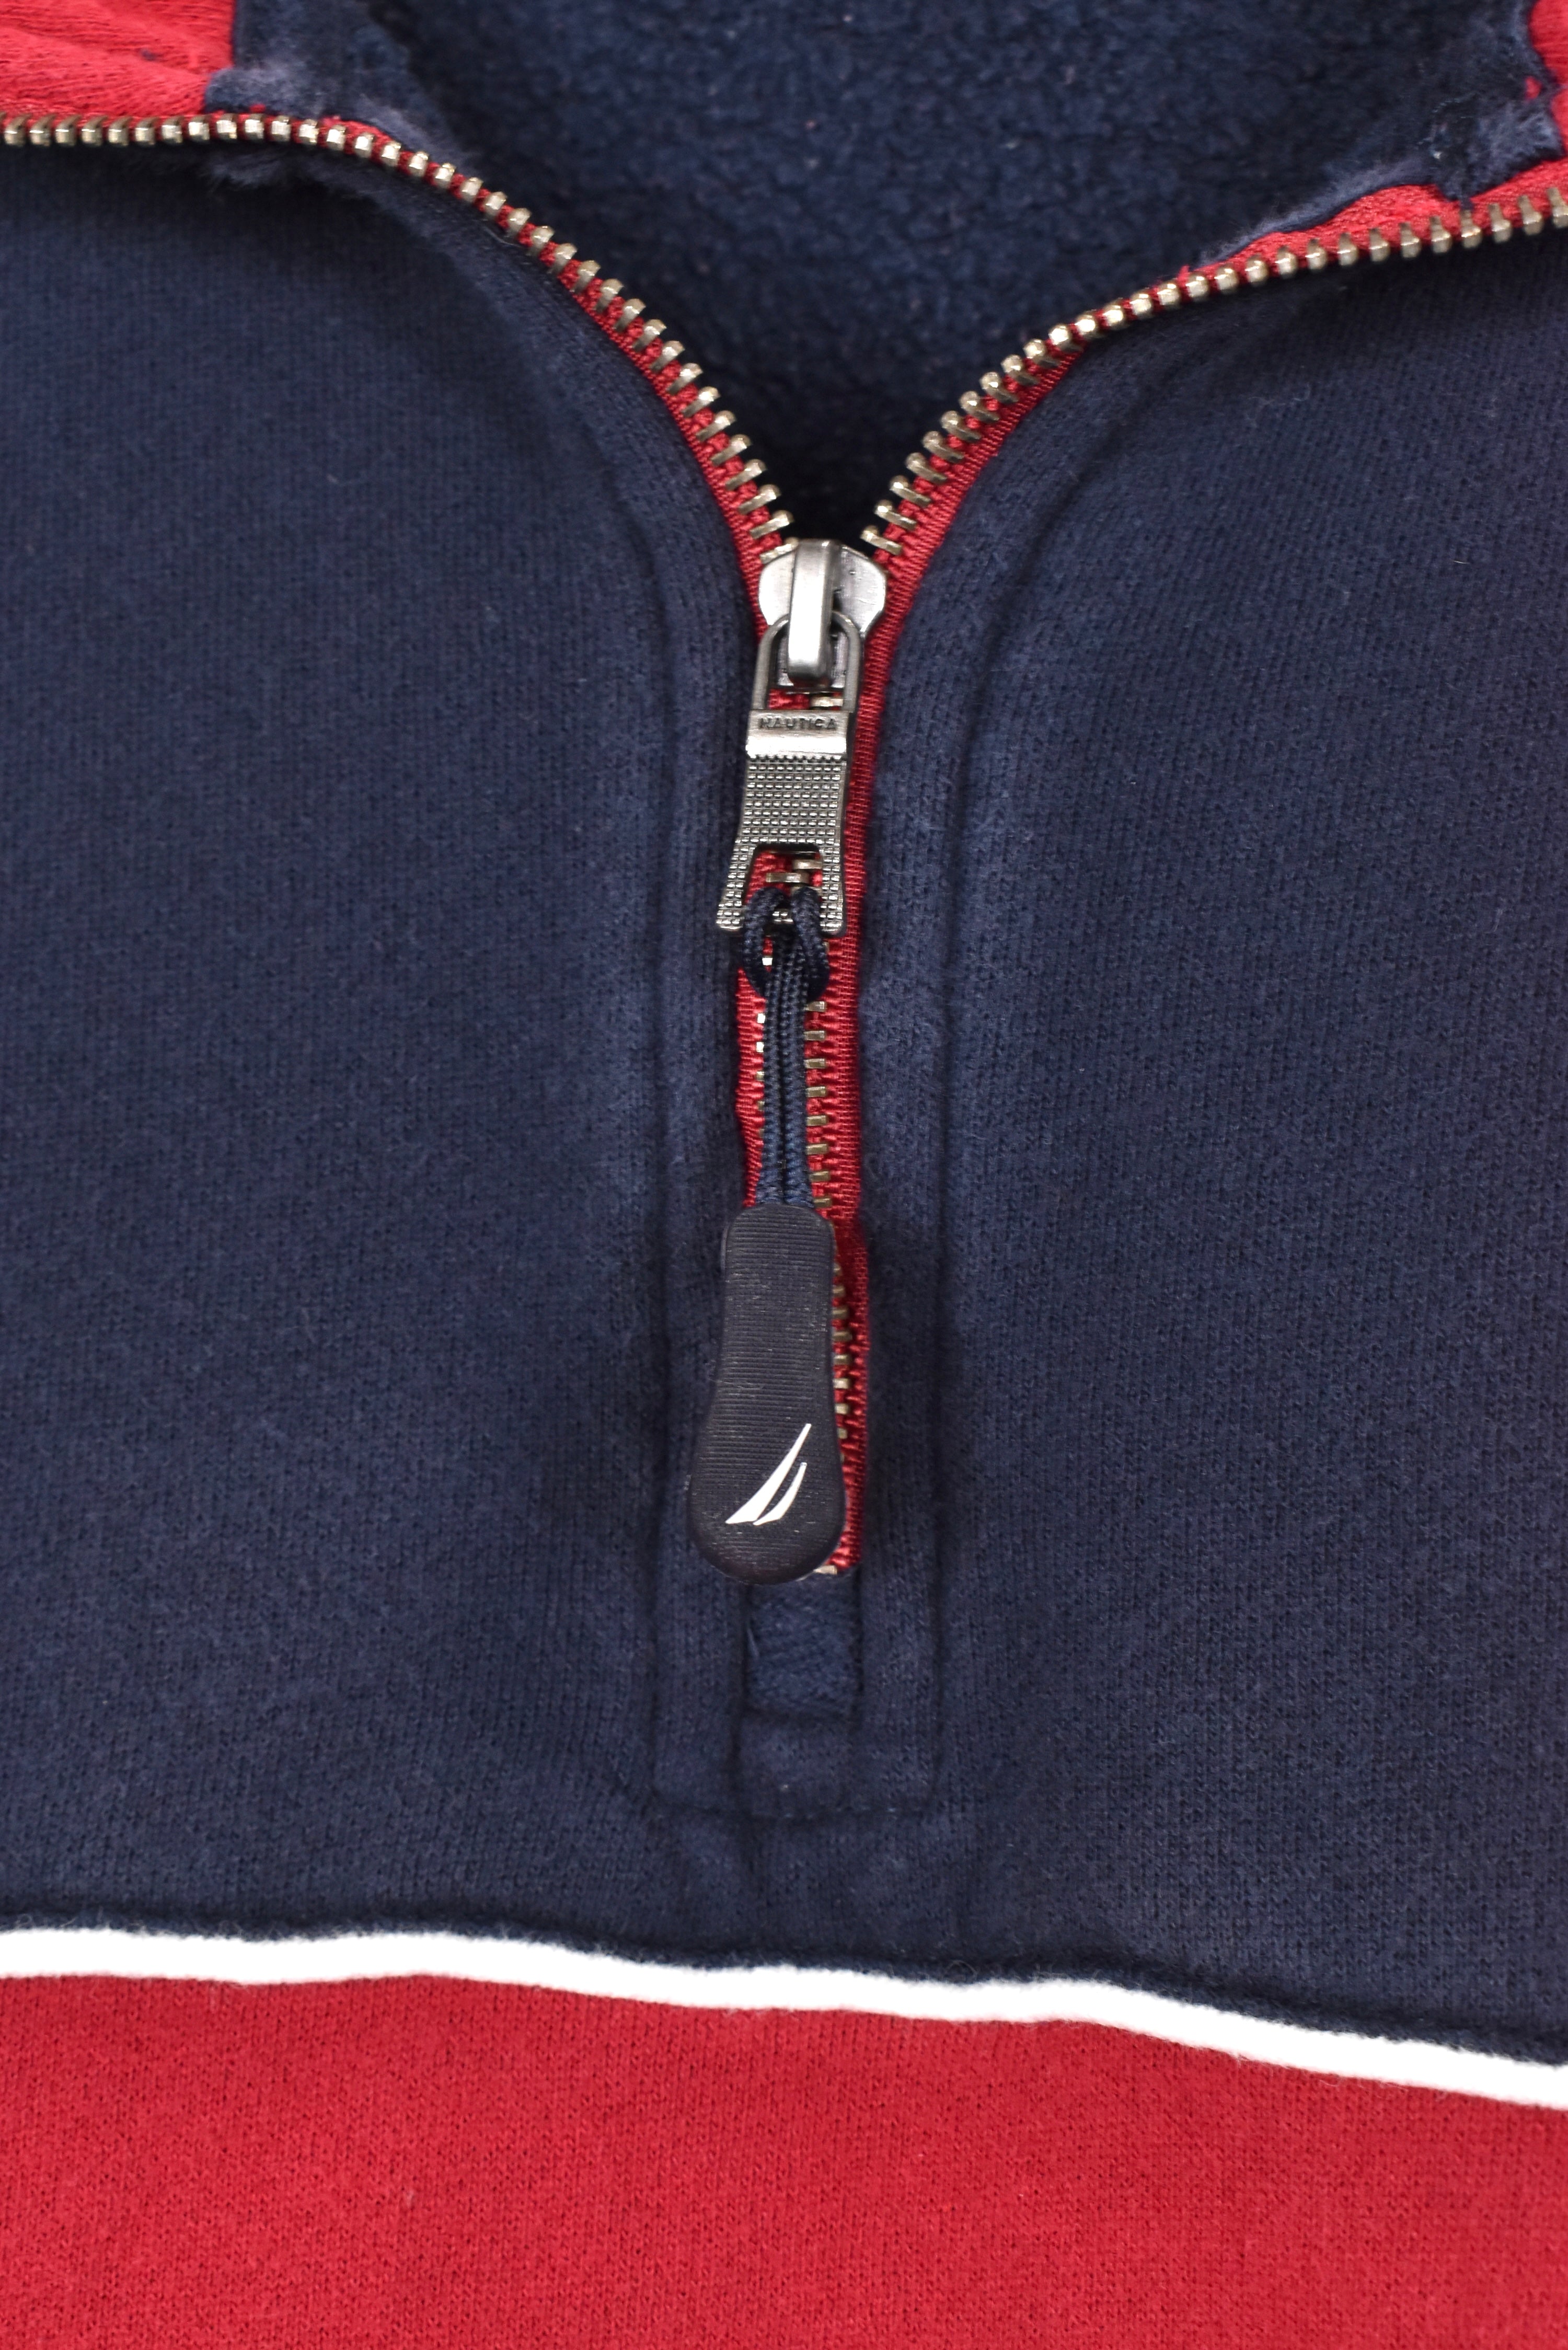 Vintage Nautica sweatshirt, embroidered 1/4 zip jumper - AU XL NAUTICA